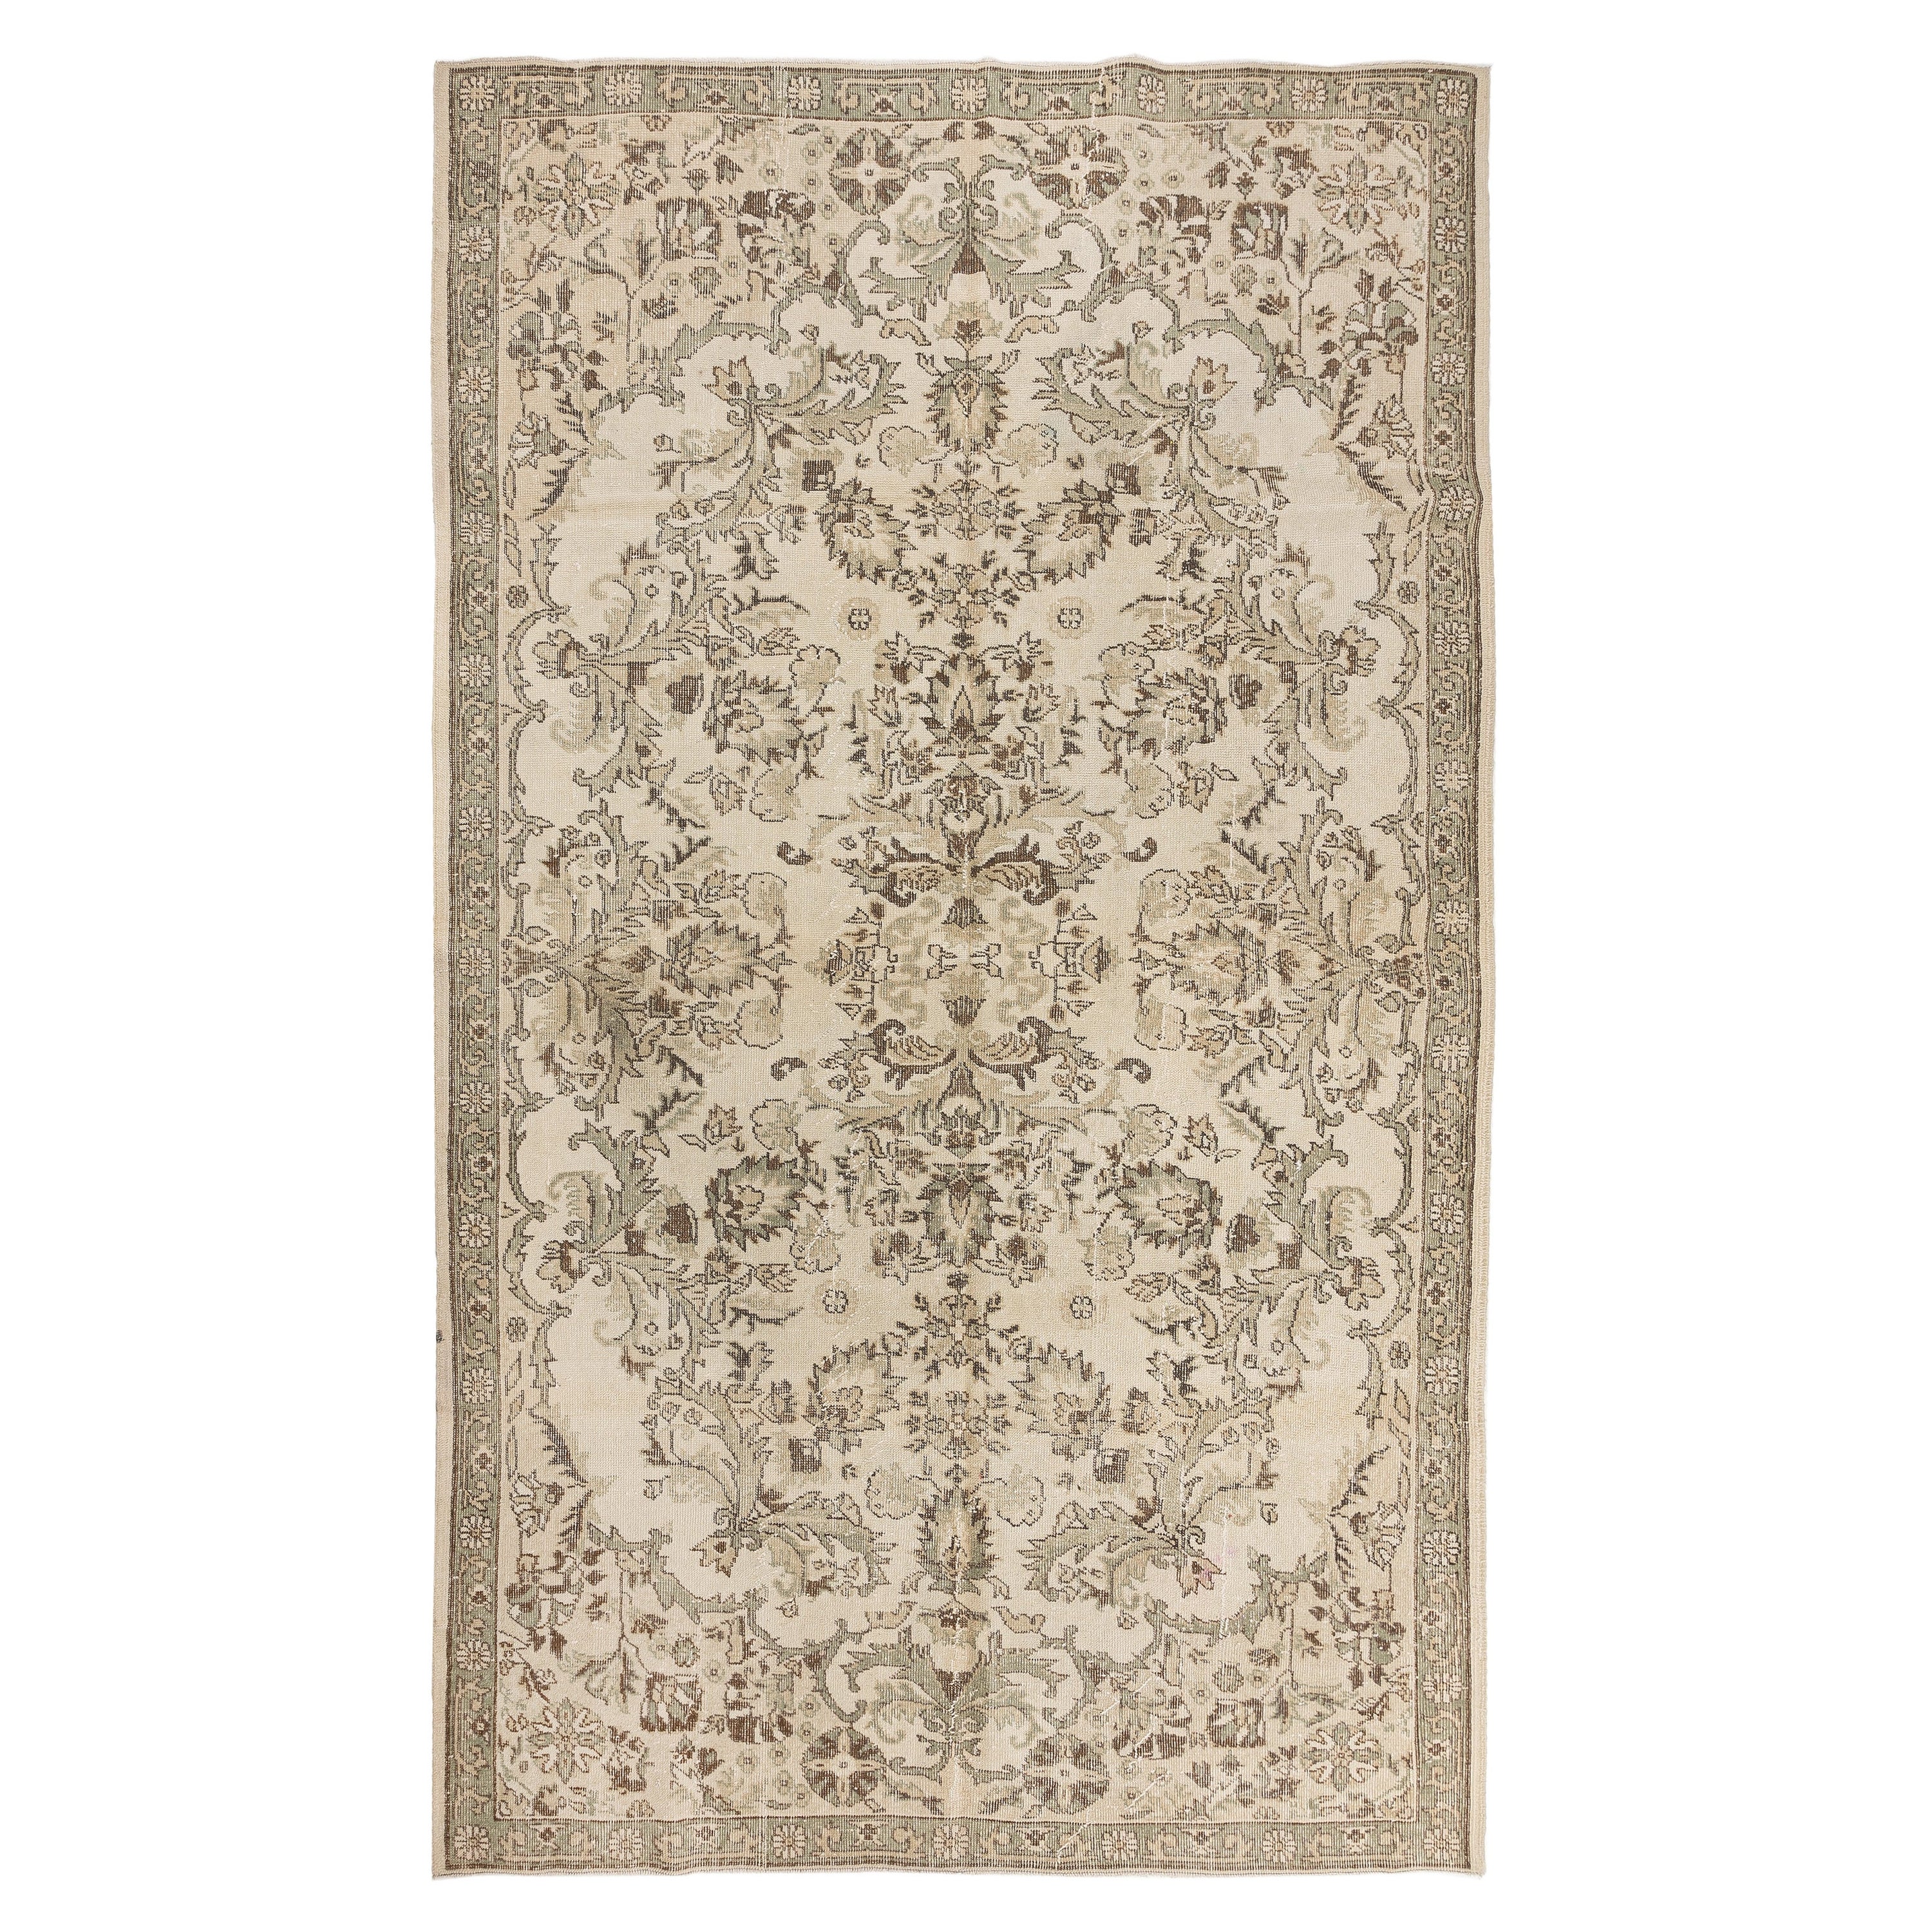 6.6x10 Ft Vintage Sun Faded Oushak Rug, Beige Handmade Anatolian Carpet For Sale